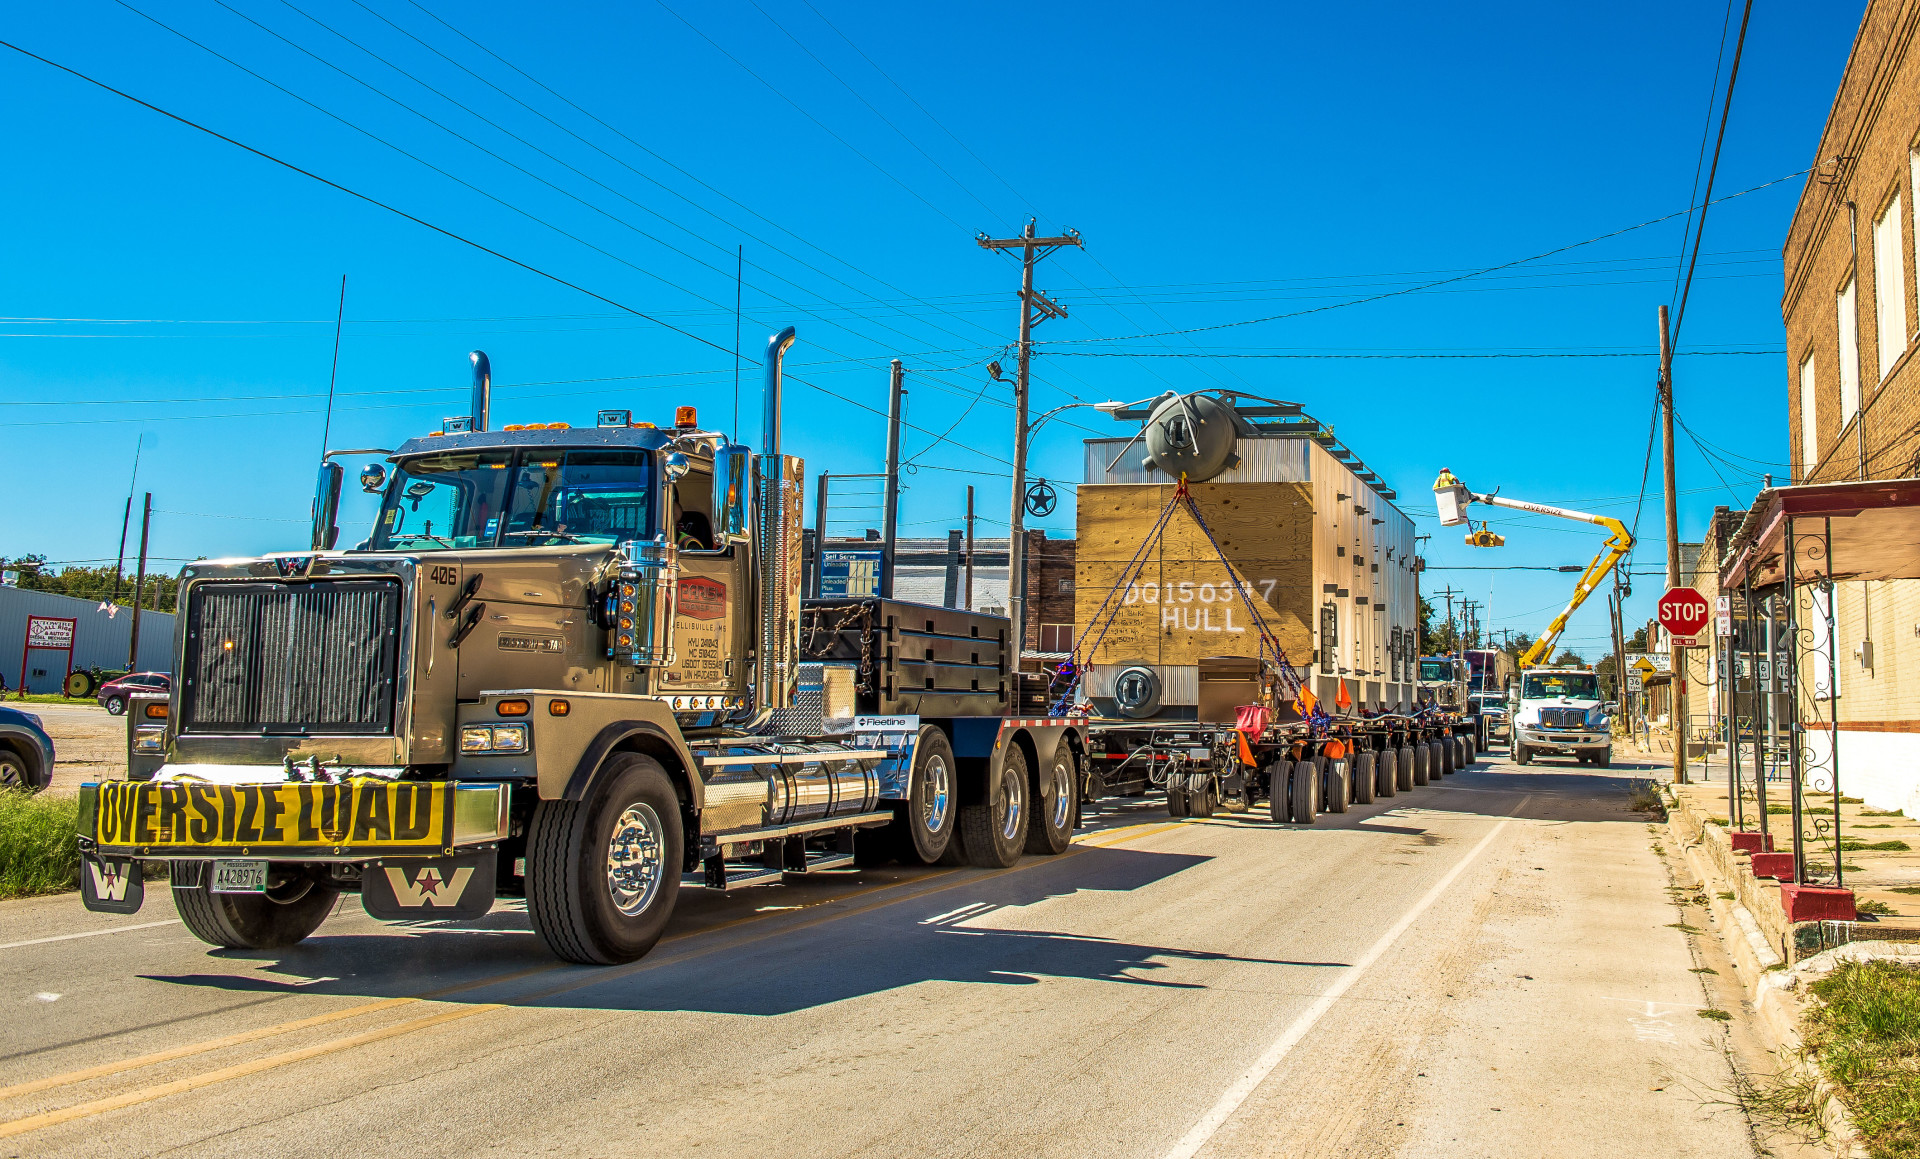 A Parish Transport hydraulic platform flatbed trailer hauls an oversize load down a main road